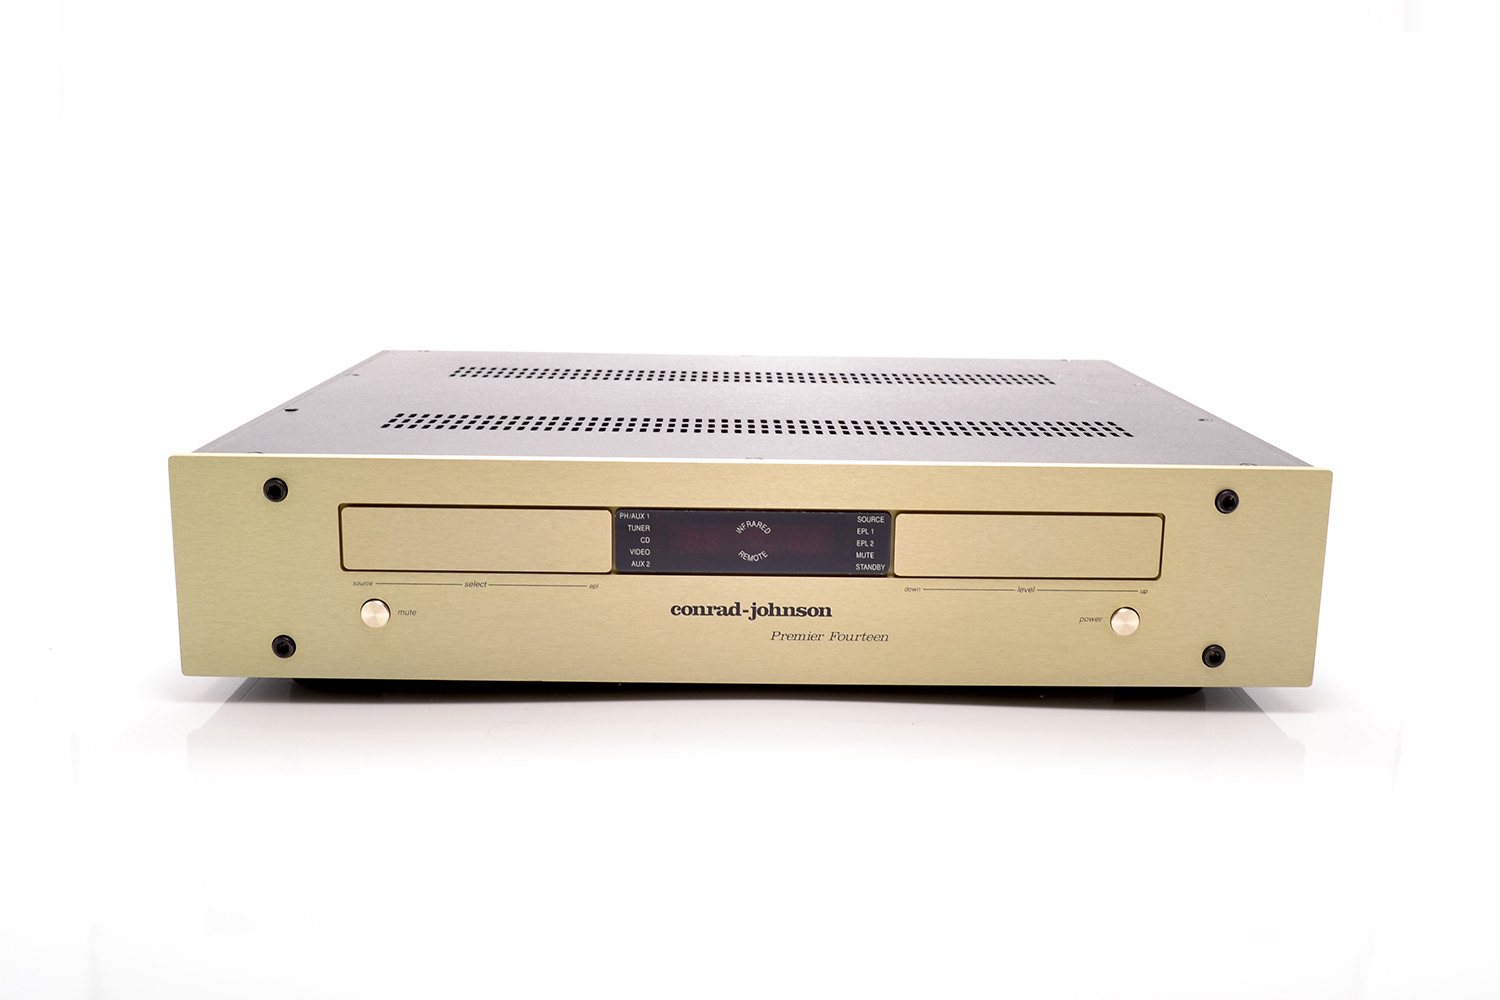 Conrad-Johnson Premier 14 – High End Stereo Equipment We Buy